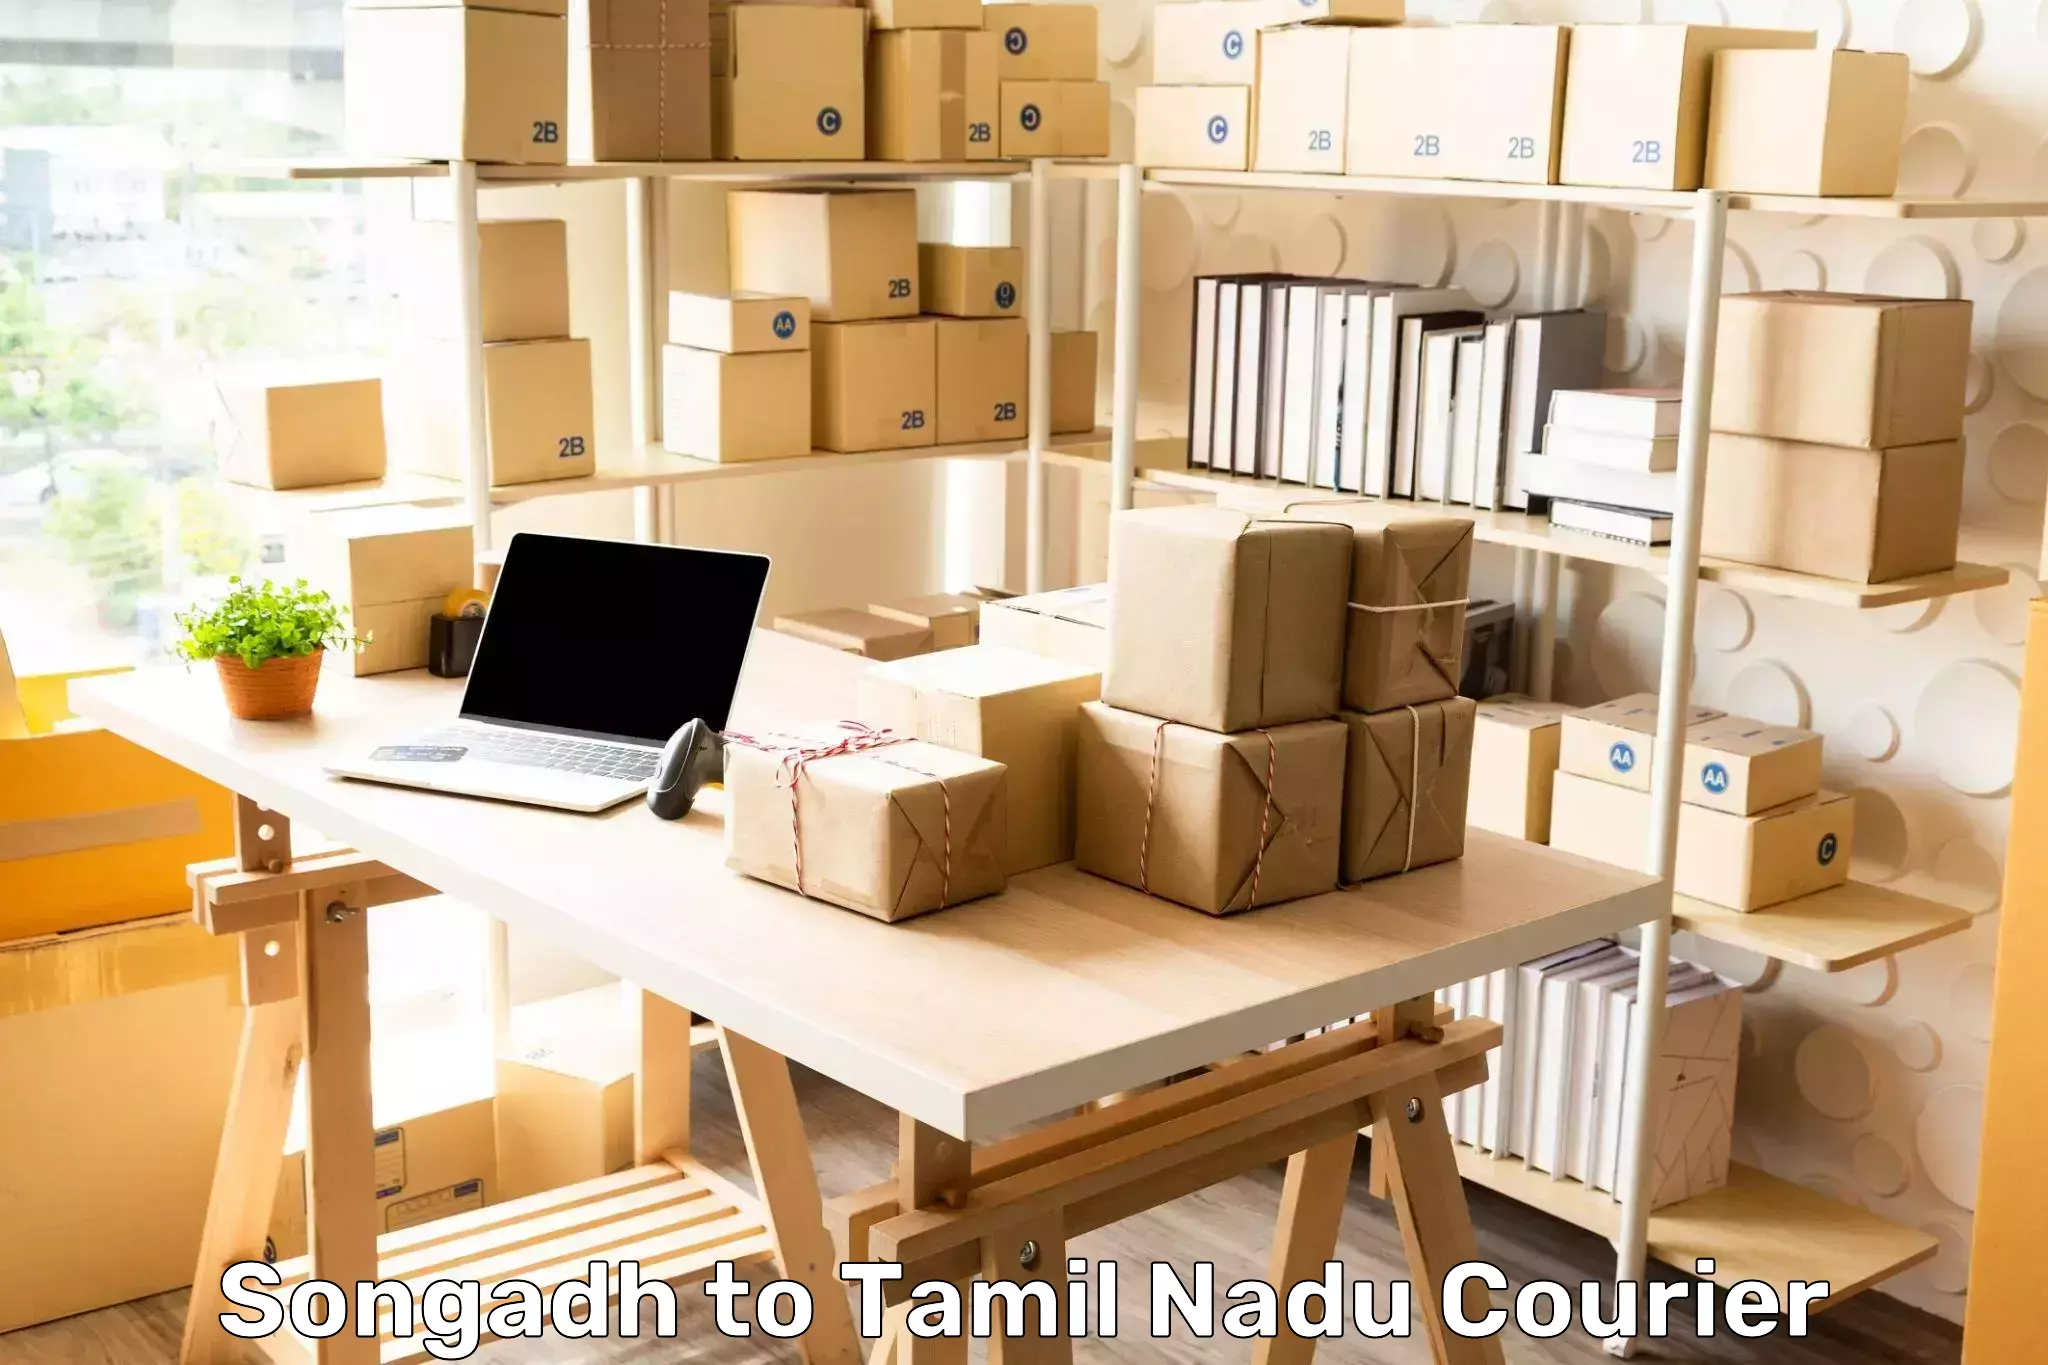 Express courier capabilities Songadh to Namakkal